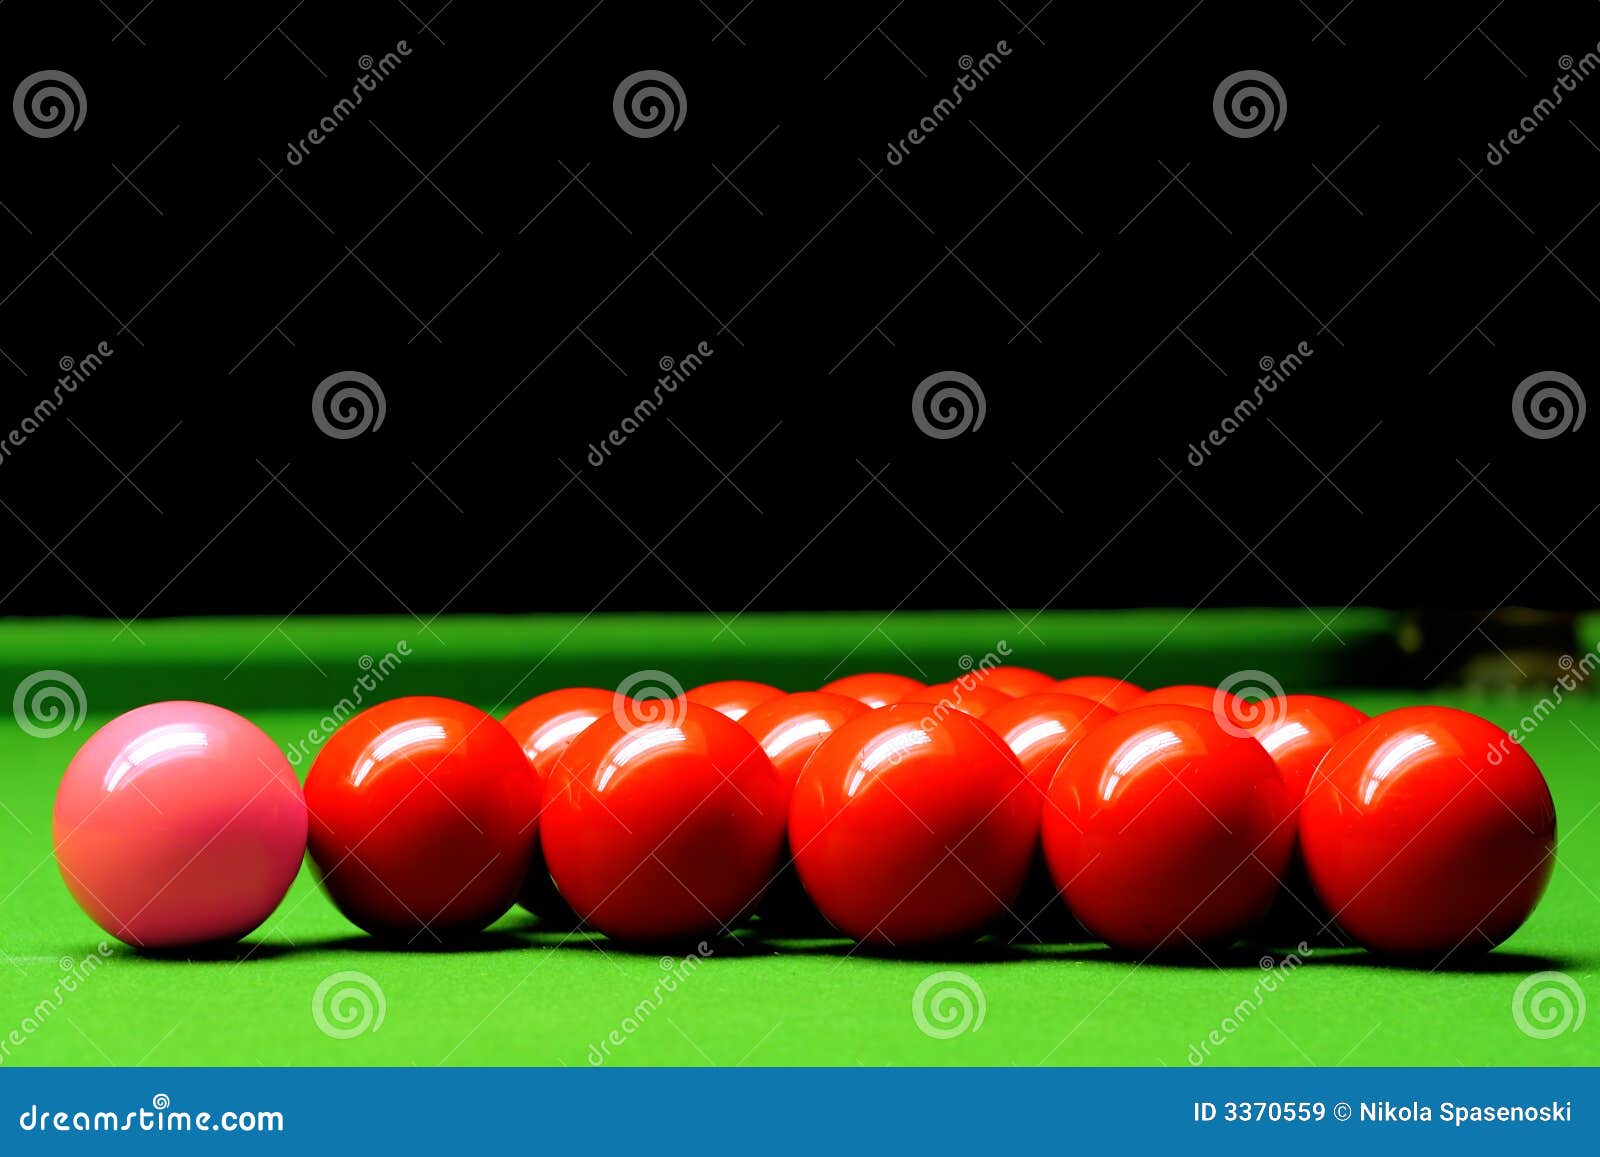 Snooker balls stock image